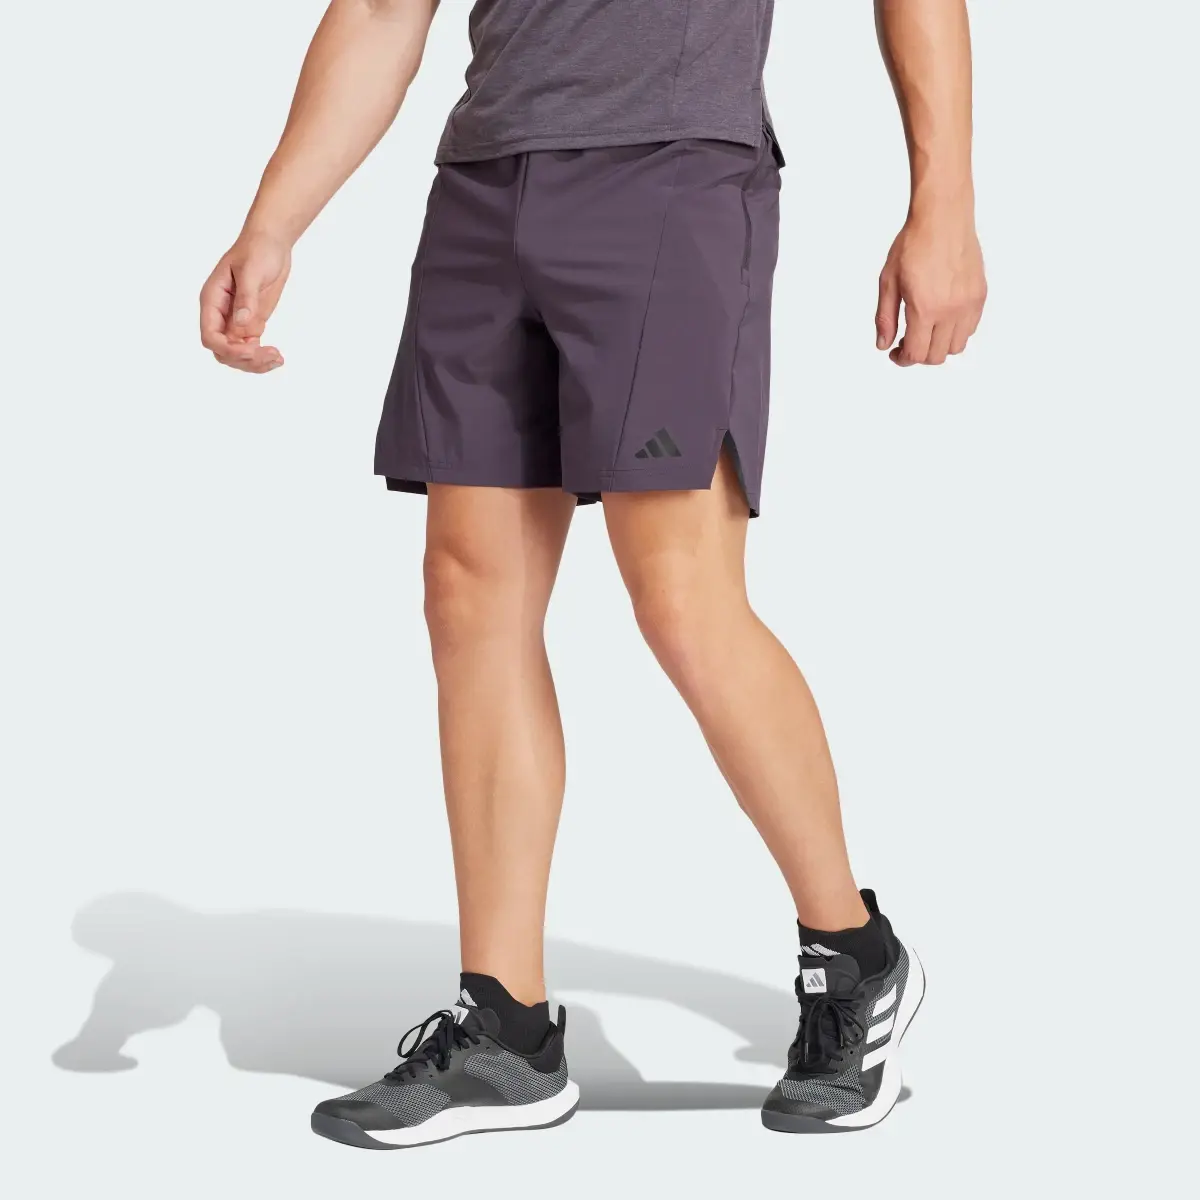 Adidas Short Designed for Training Workout. 1